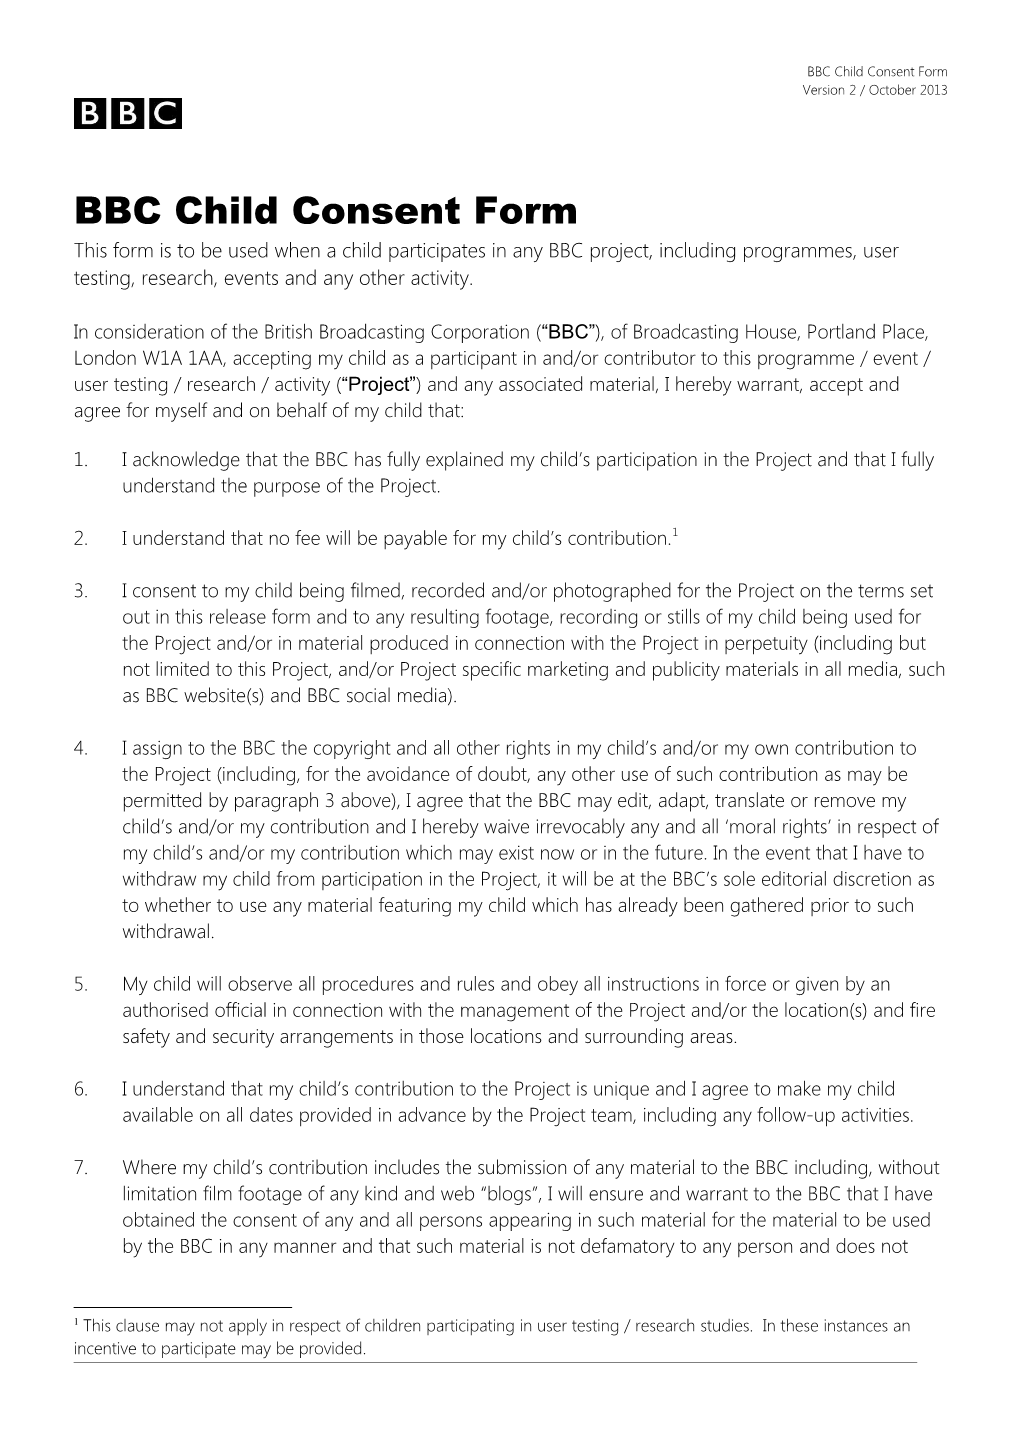 BBC Child Consent Form Version 2 / October 2013